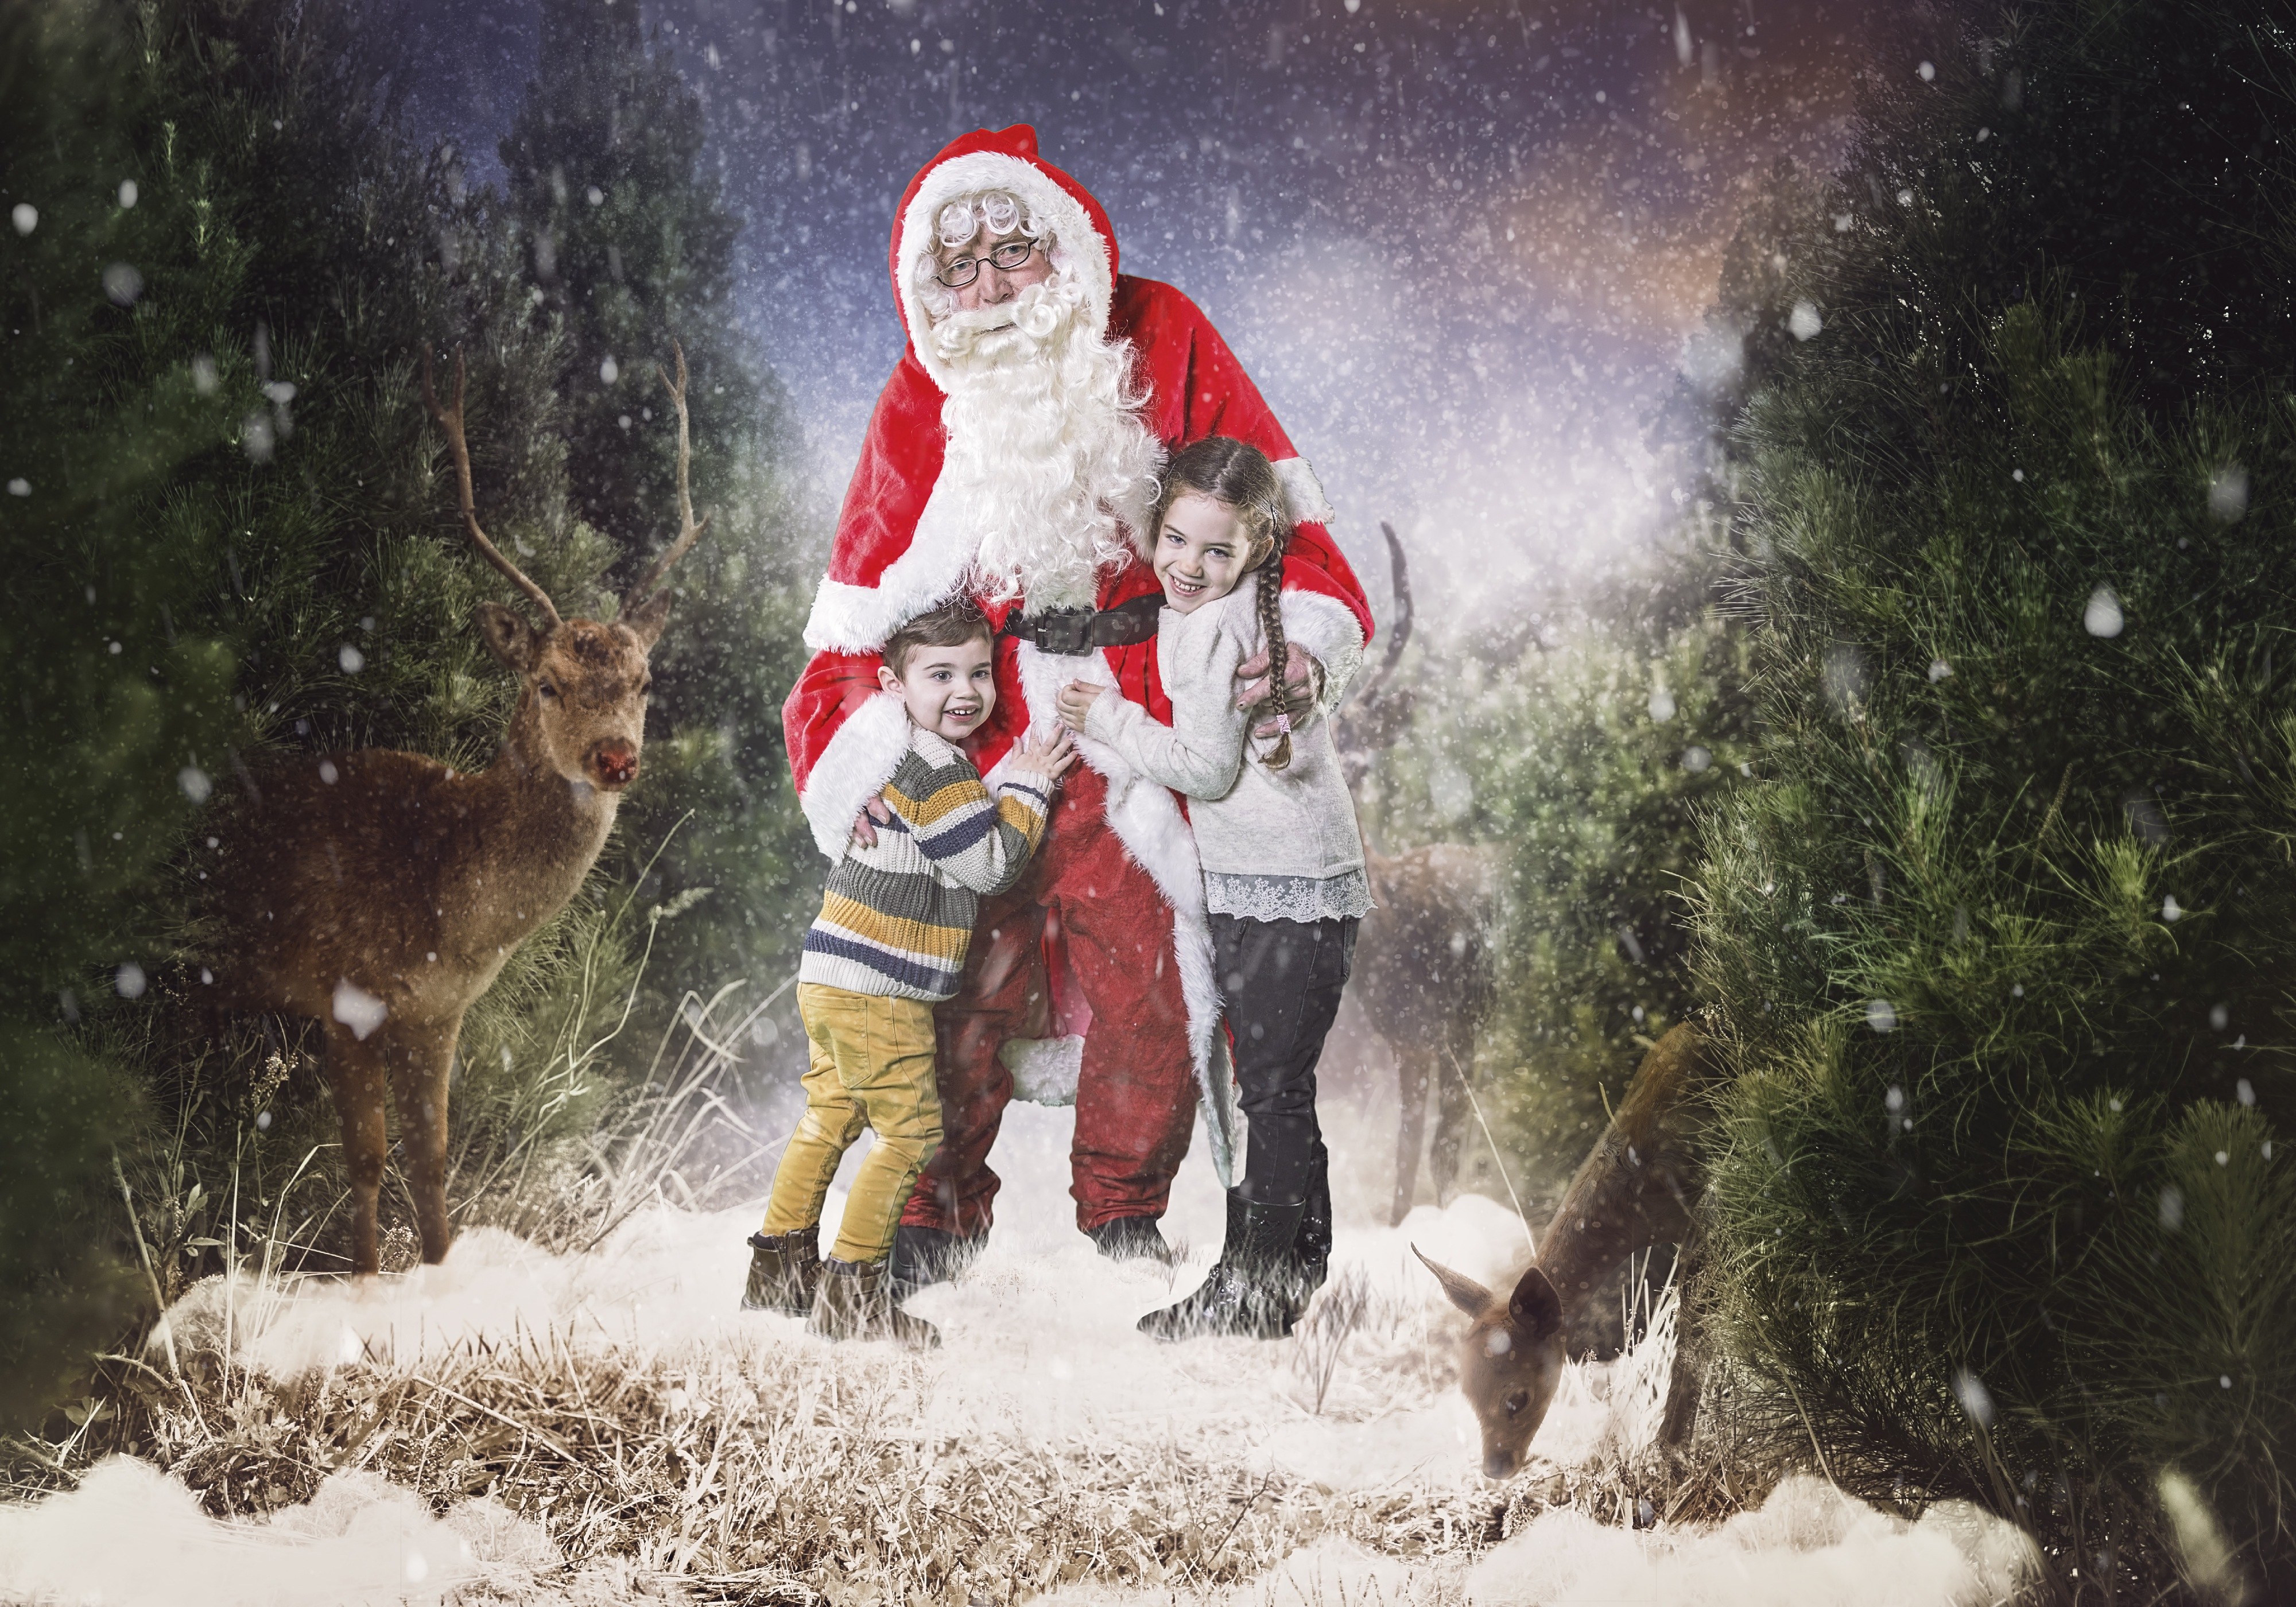 Magical-photos-with-Santa